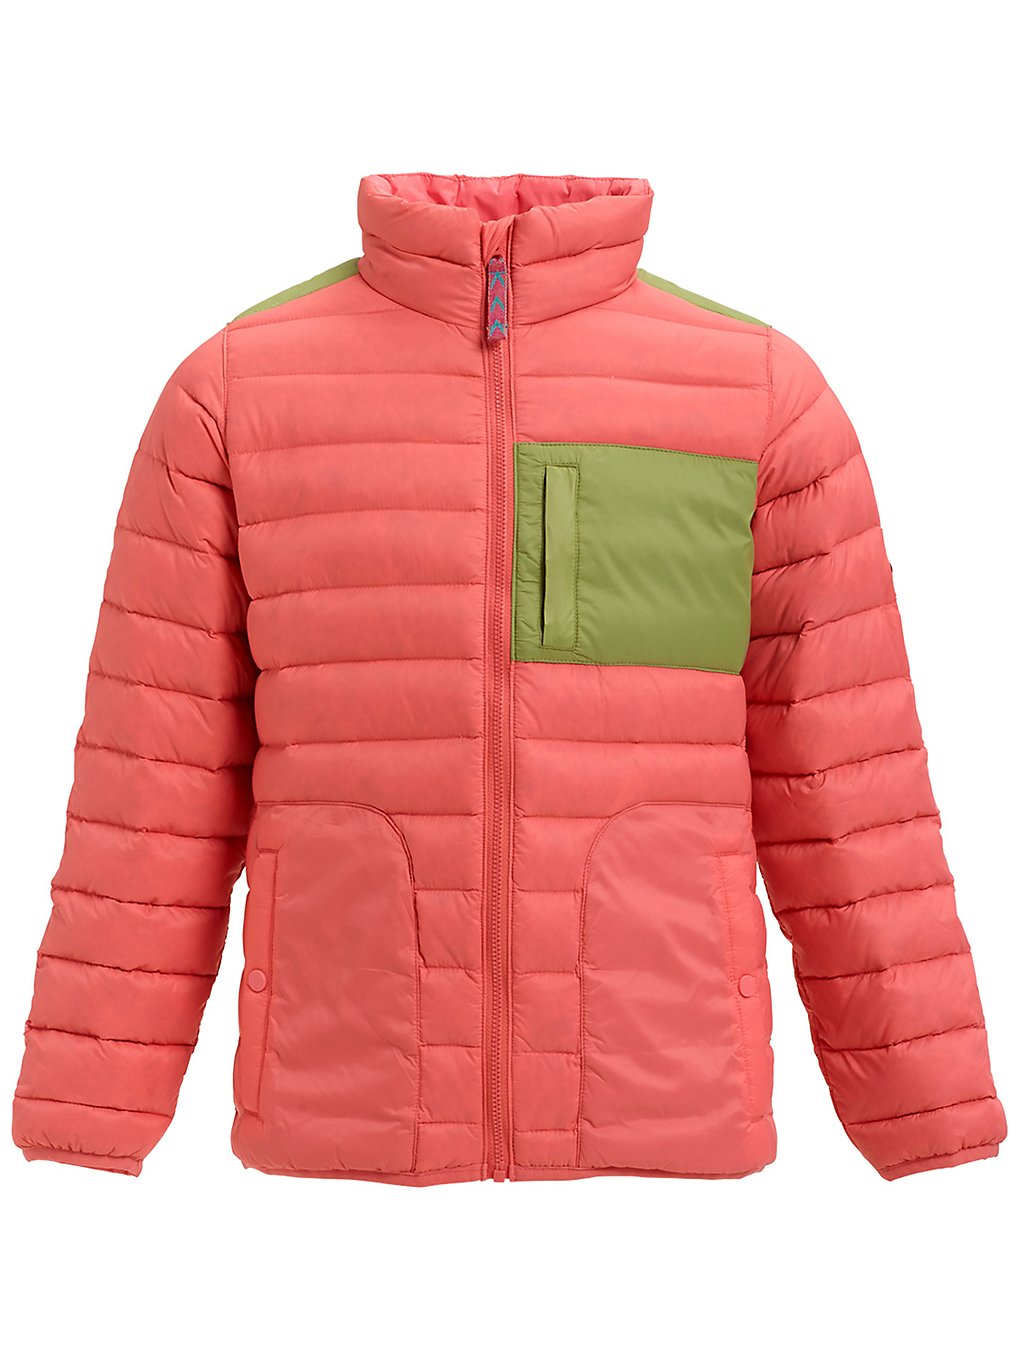 Burton evergreen insulator jacket pinkki, burton